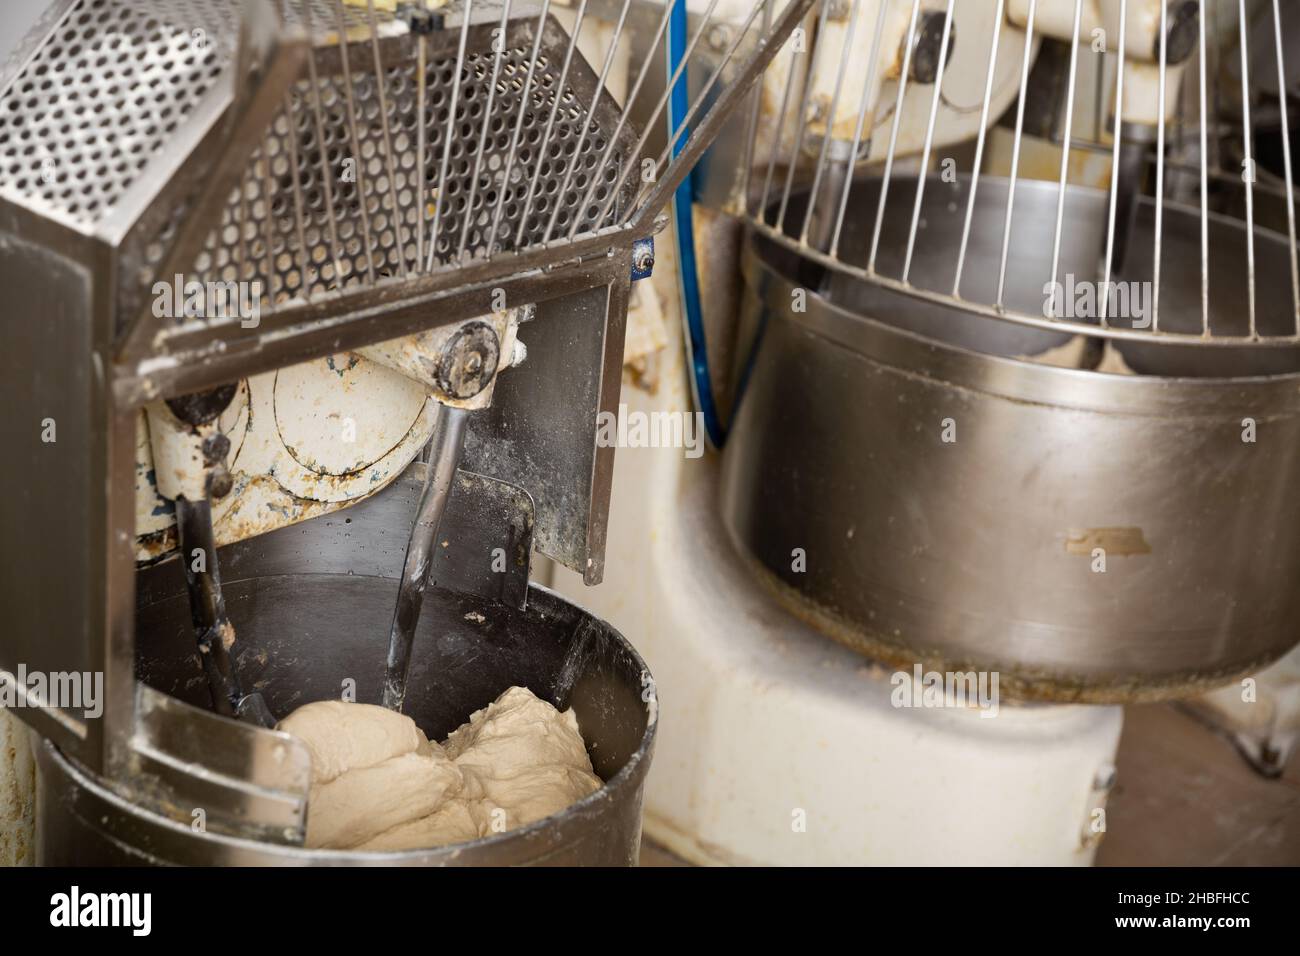 Making bread dough in kneading machine Stock Photo